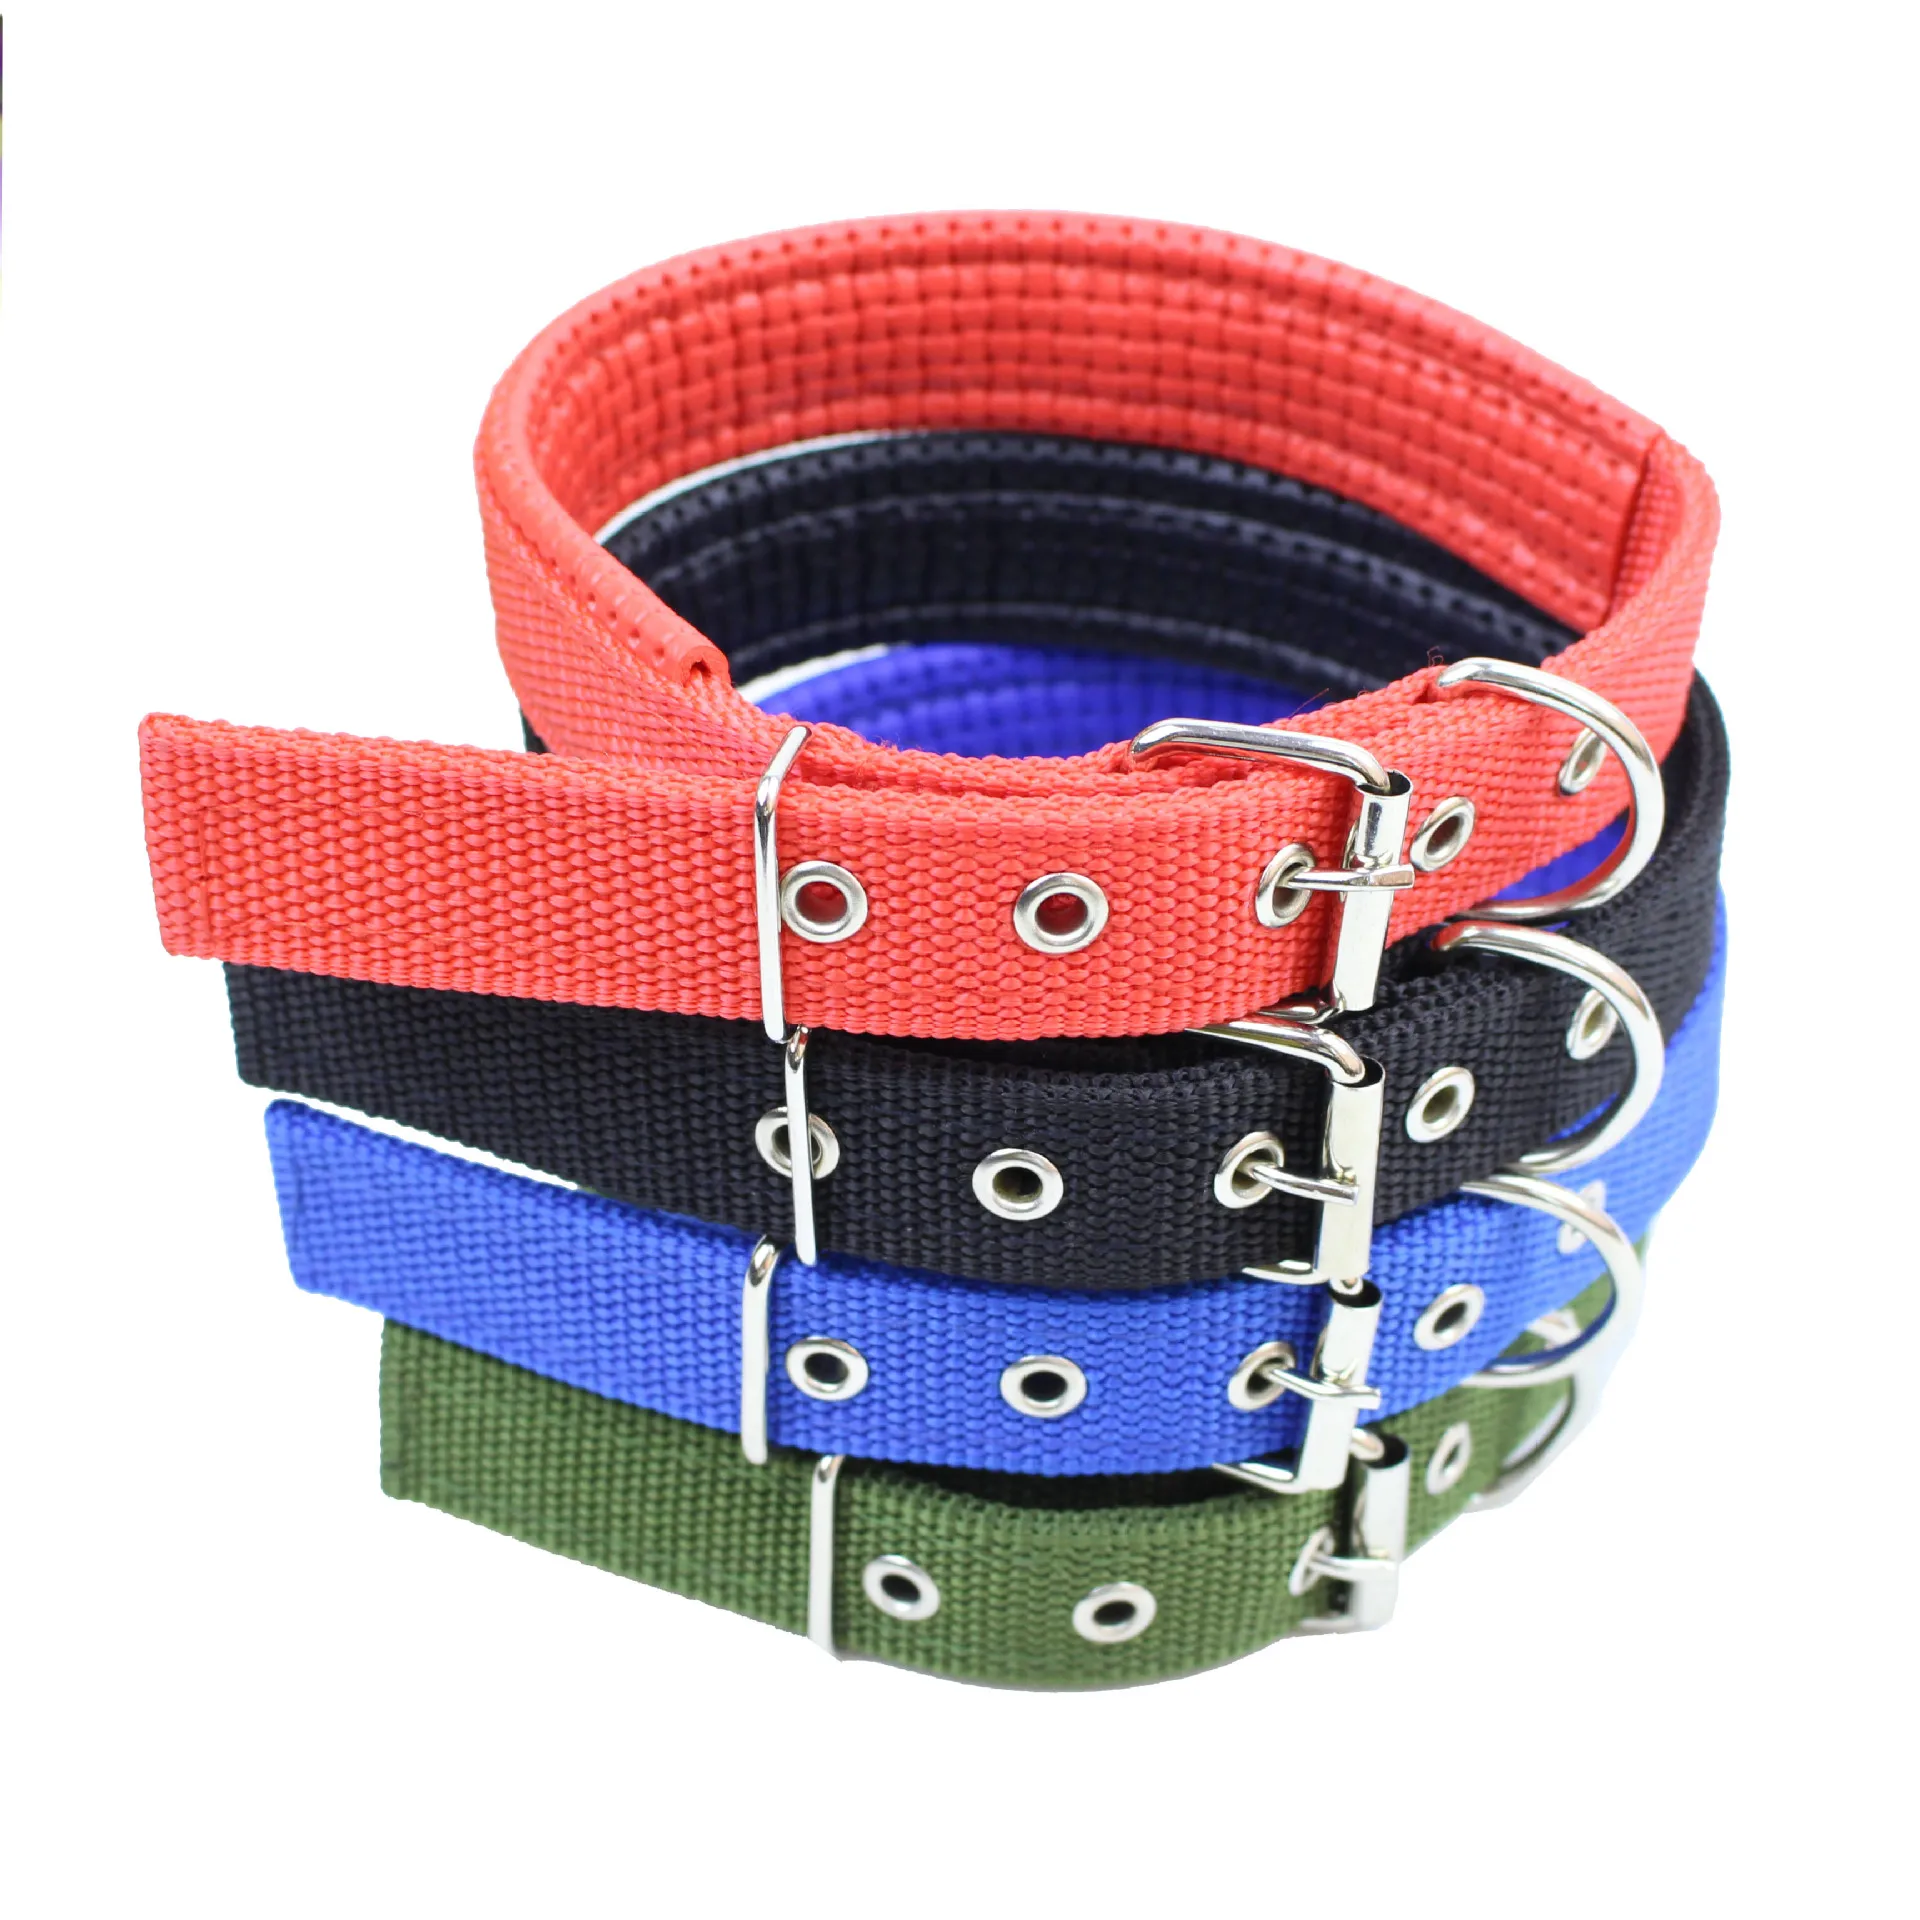 

Cheap Price Pet Dog Collar Pet Supplies Wholesale Soft Adjustable Neck Set Dog Leash Pet Products, Black blue red green